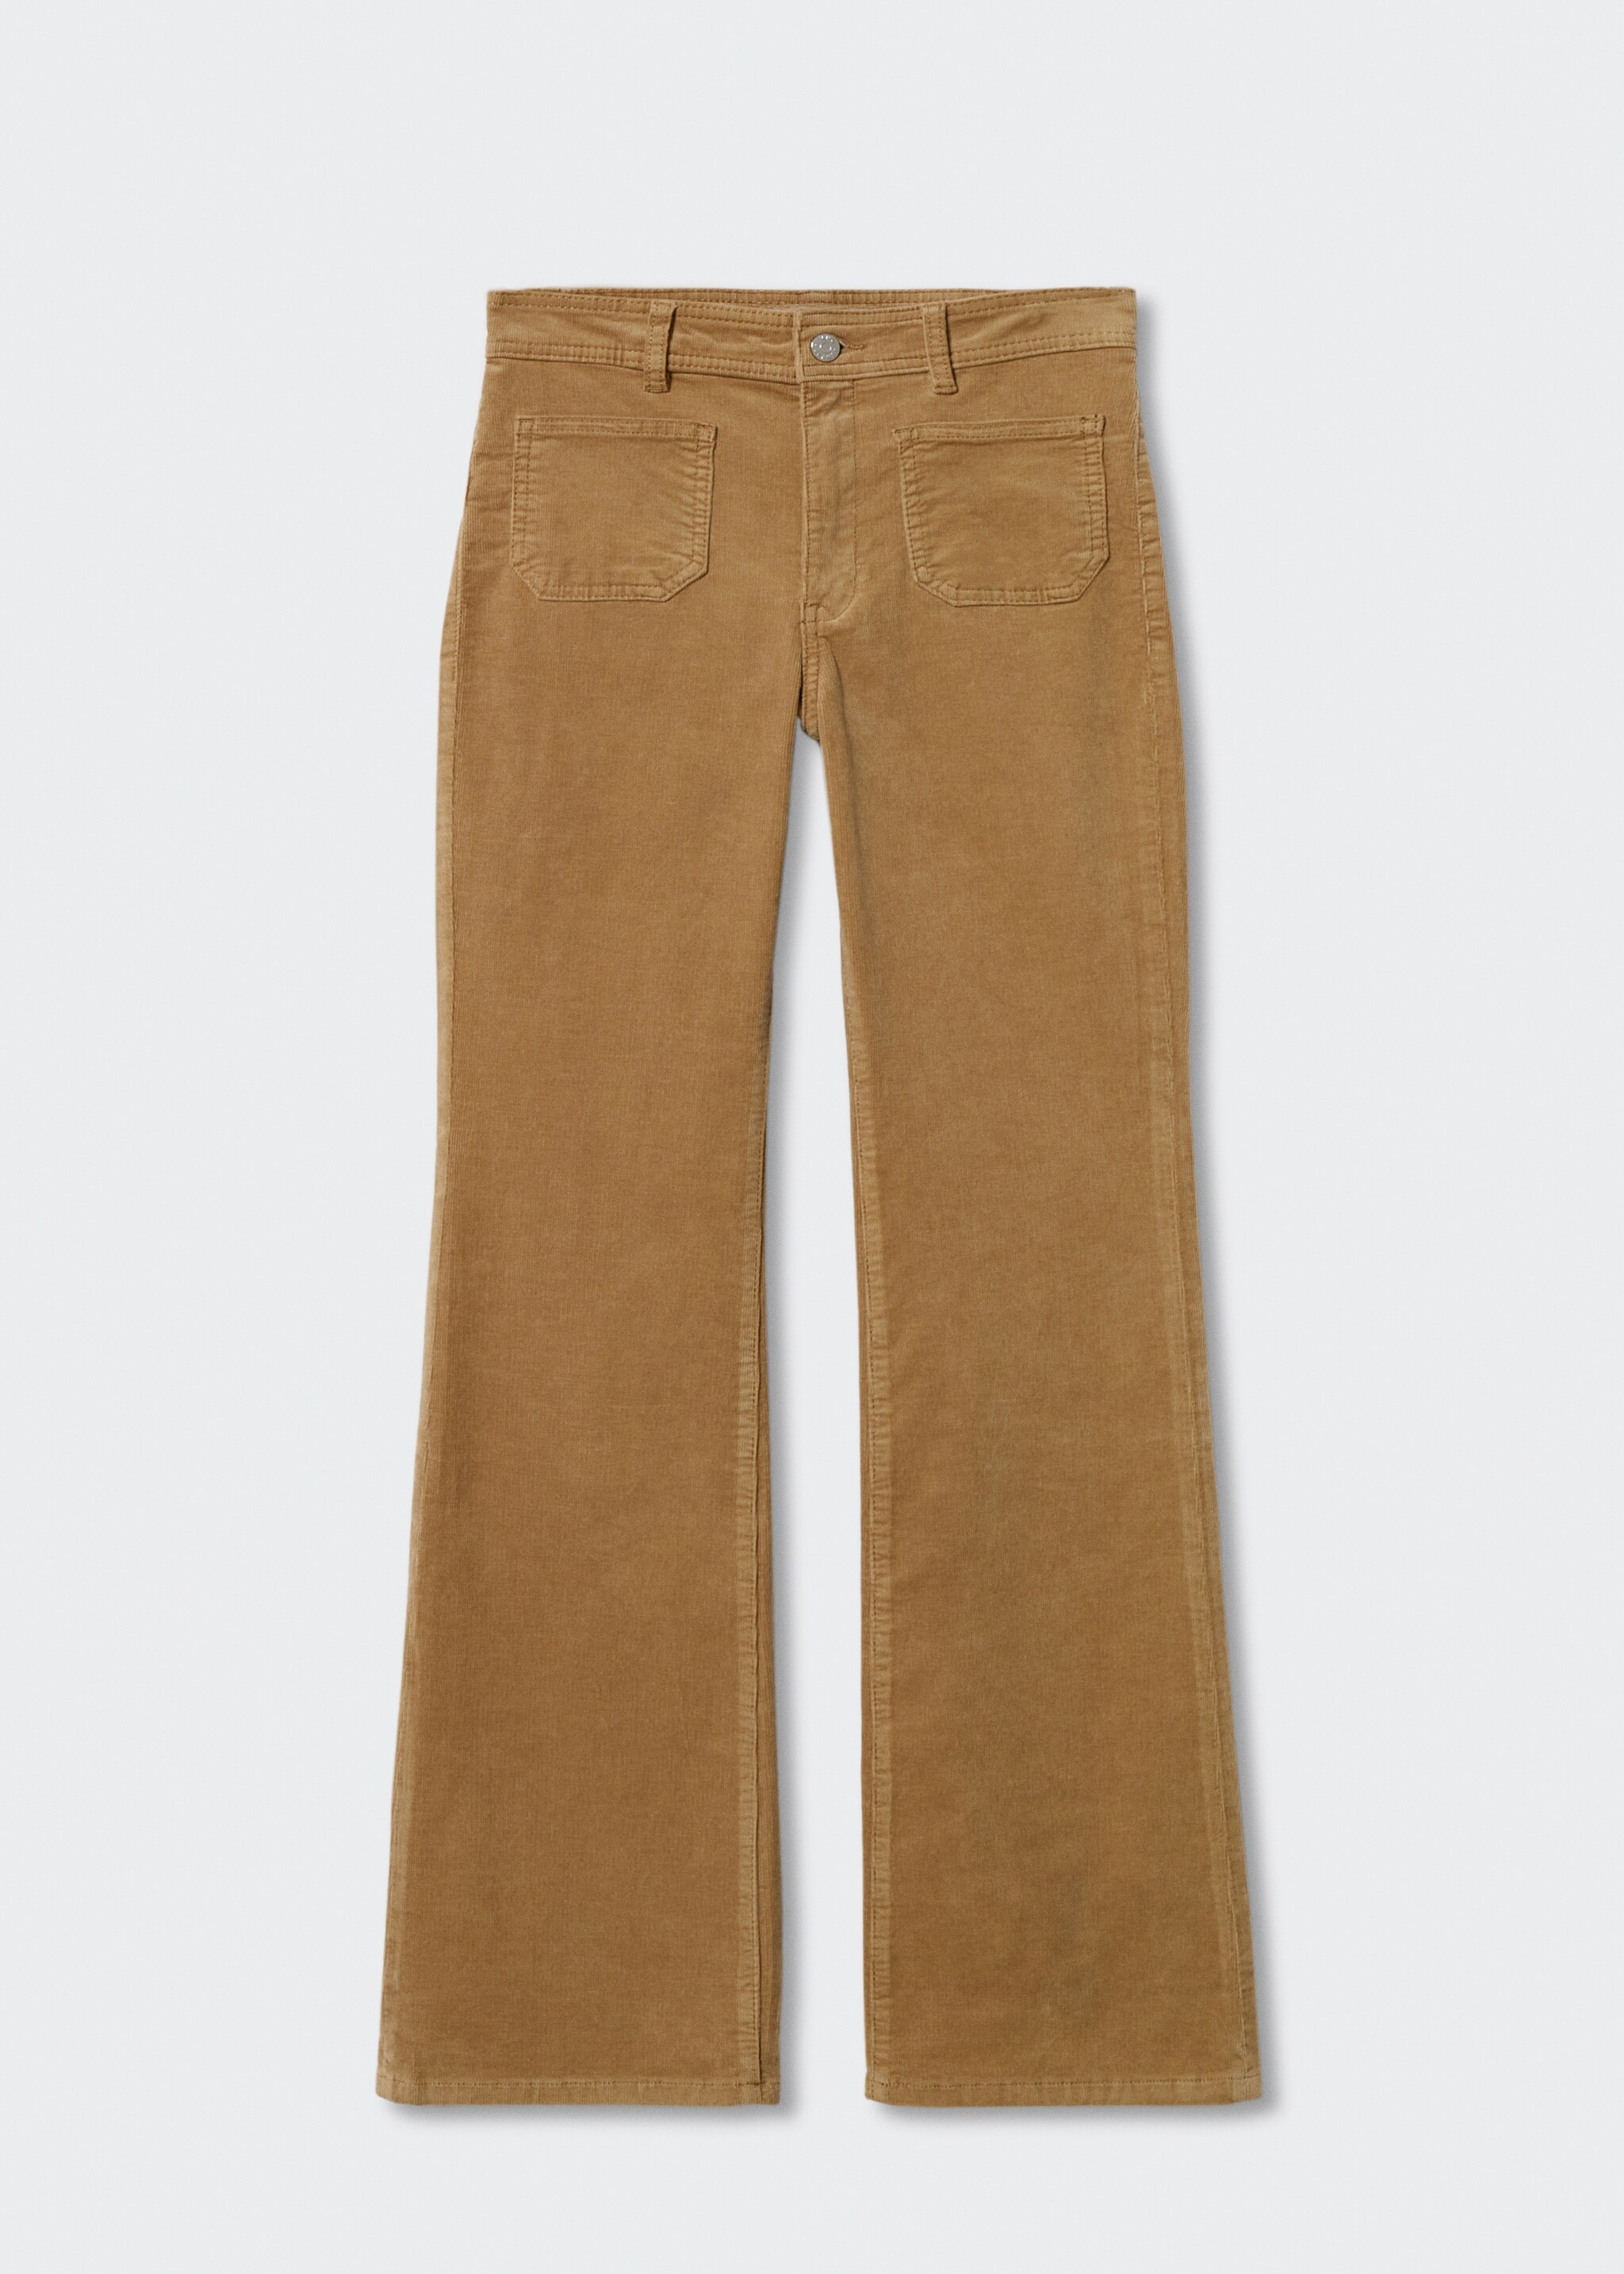 Jeans pana bolsillos  - Artículo sin modelo